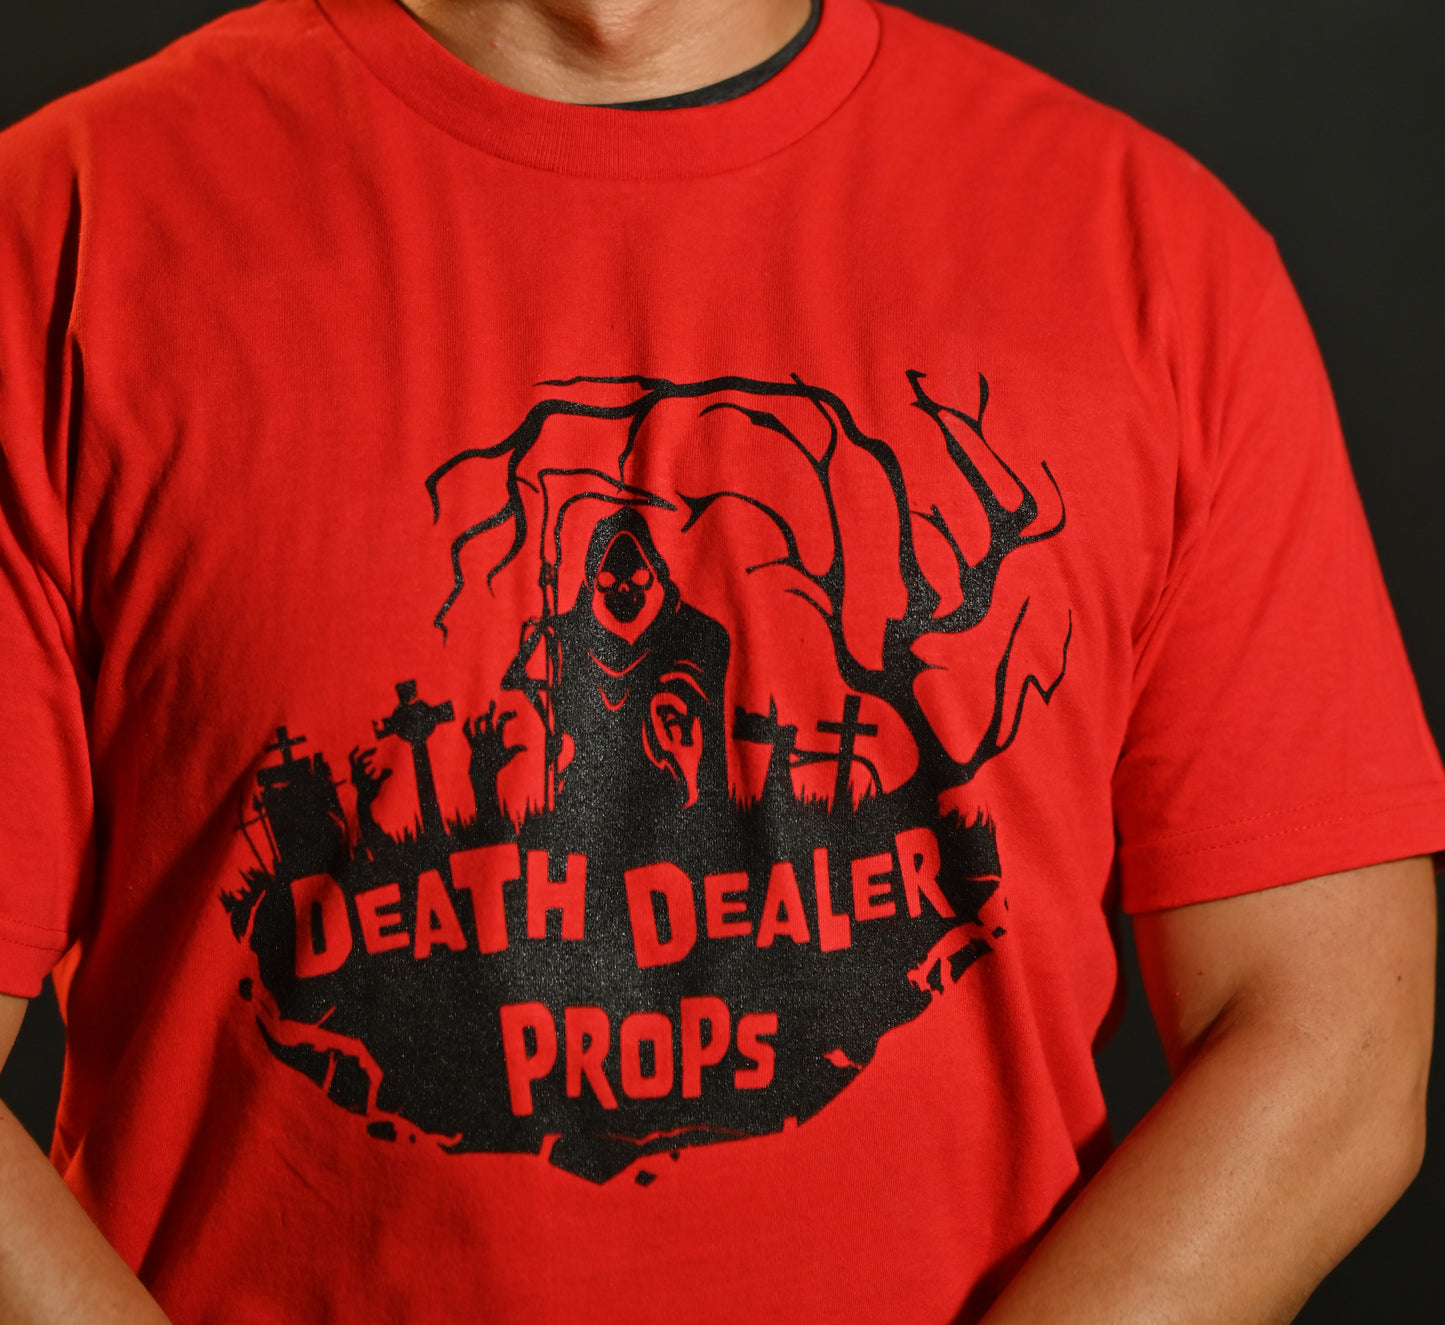 Death Dealer Props T-Shirt